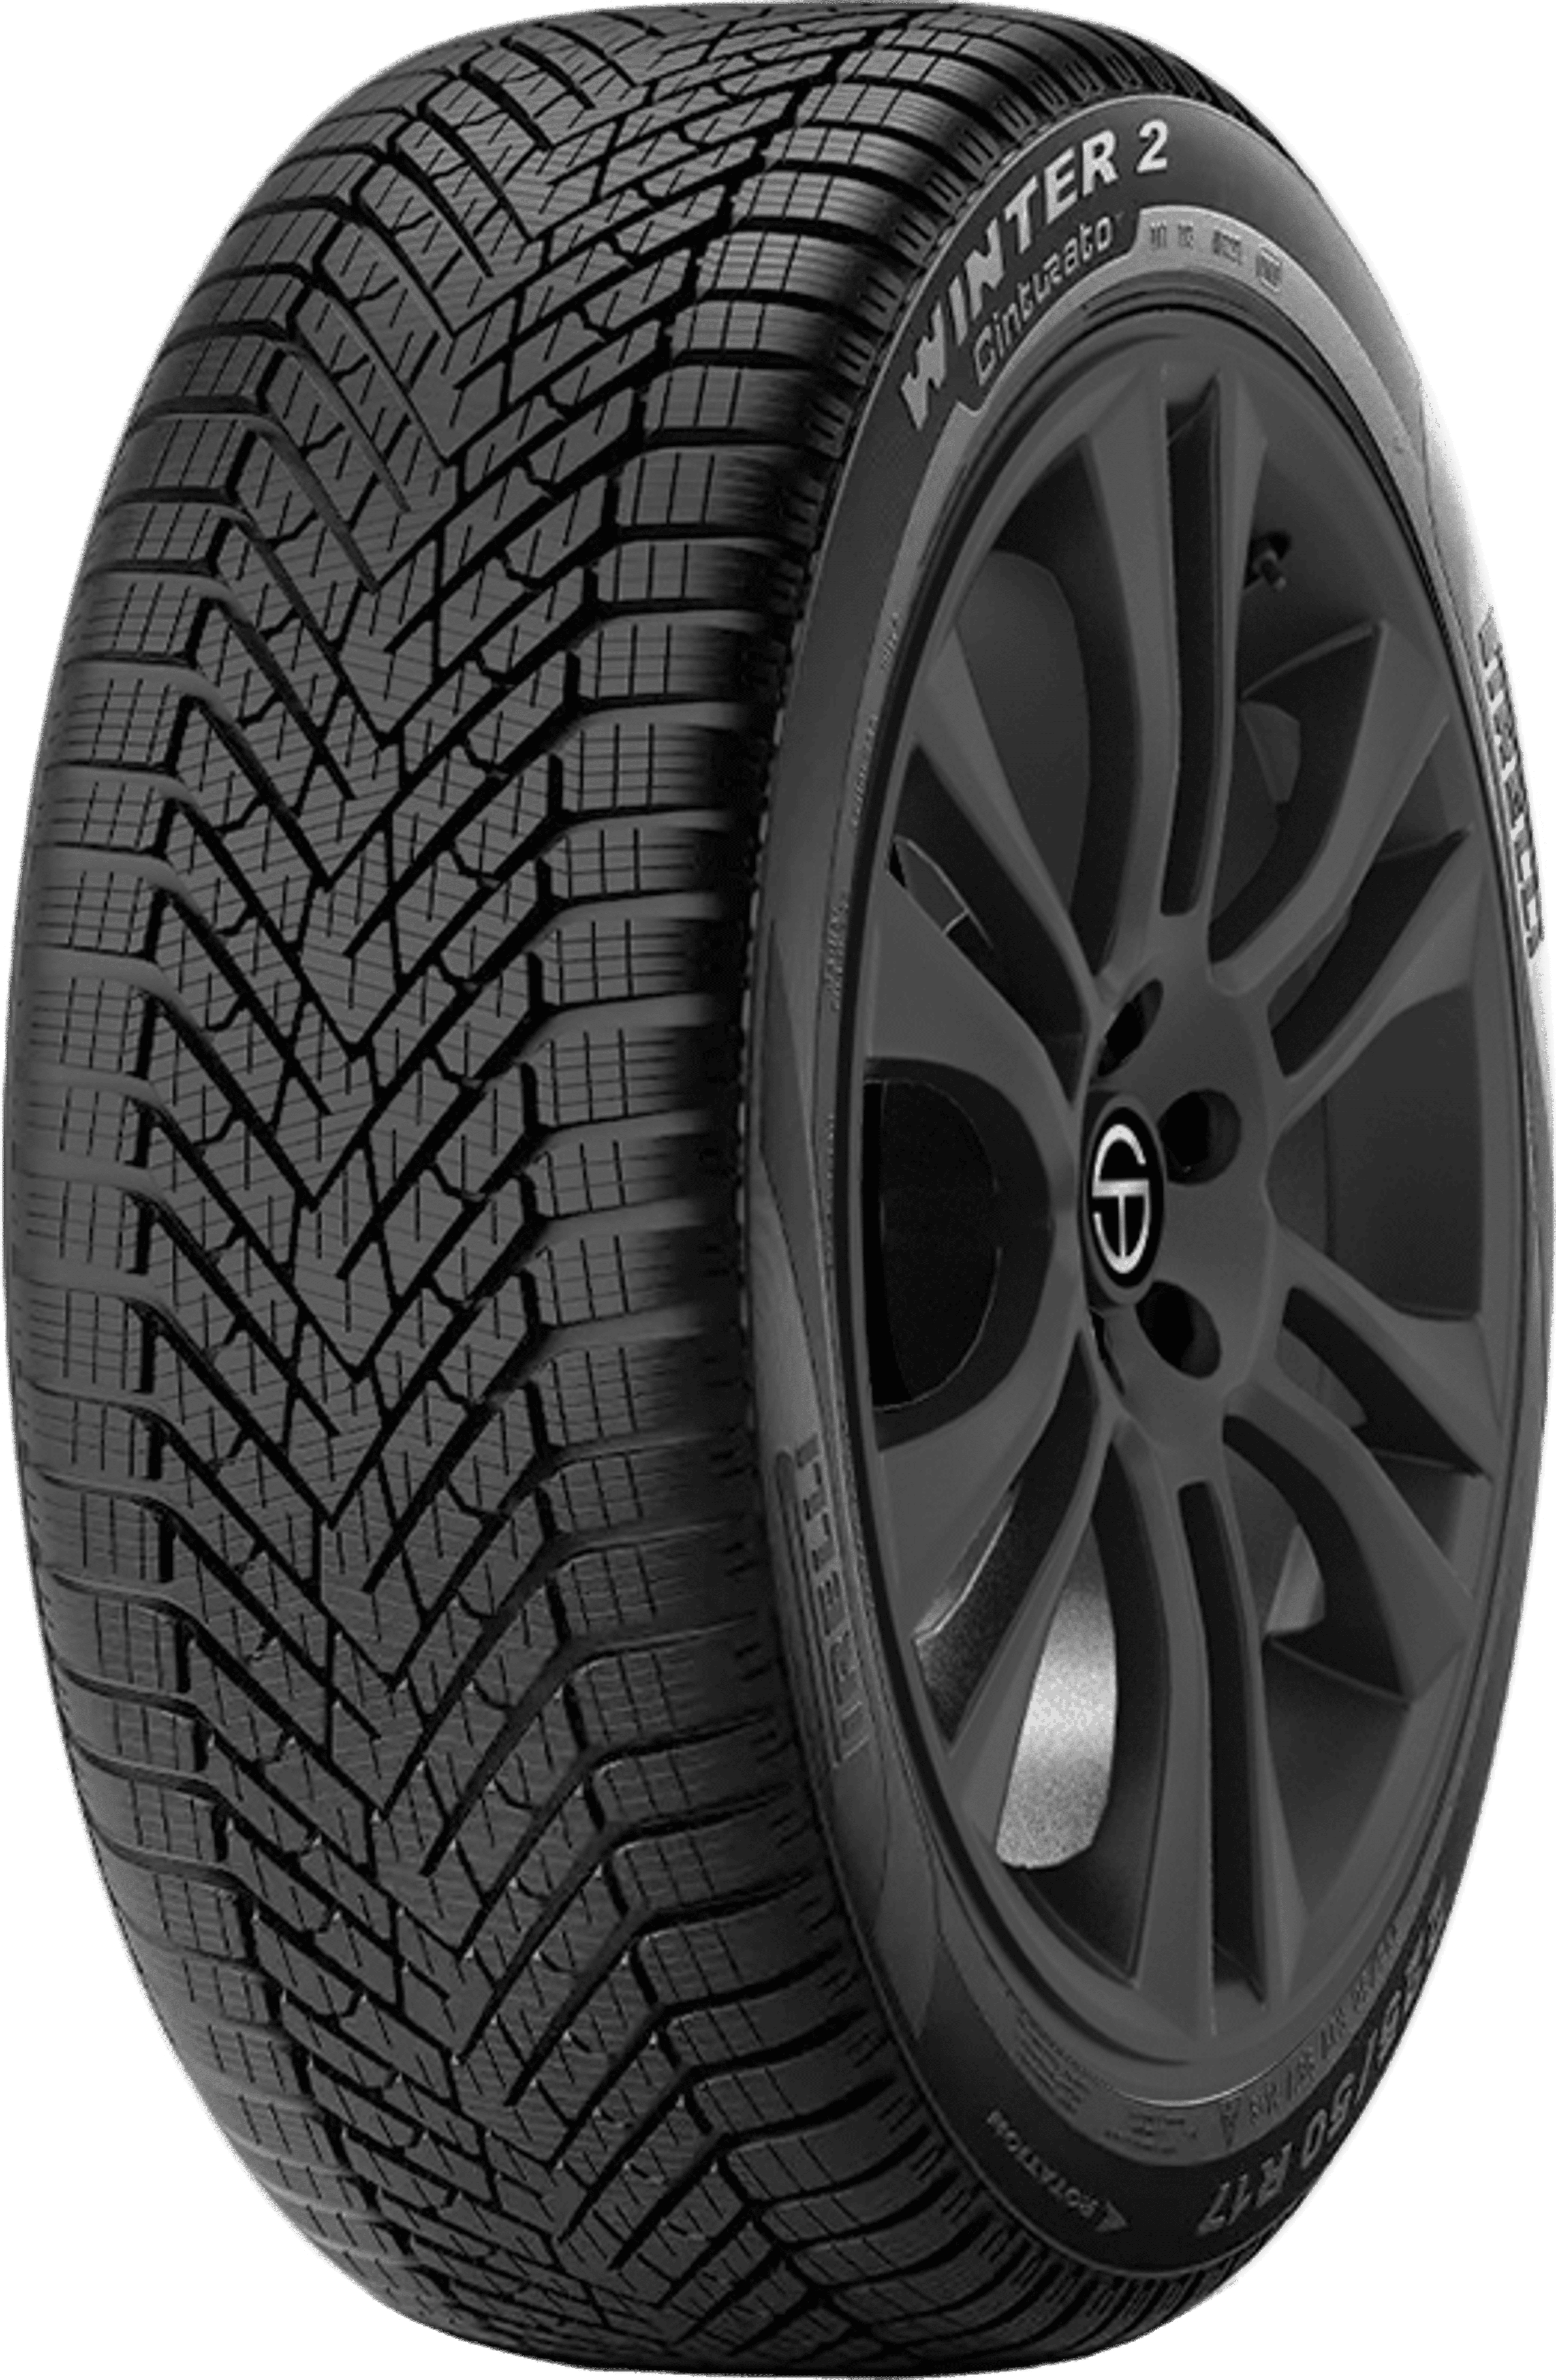 Buy Pirelli Cinturato Winter 2 Tires Online | SimpleTire